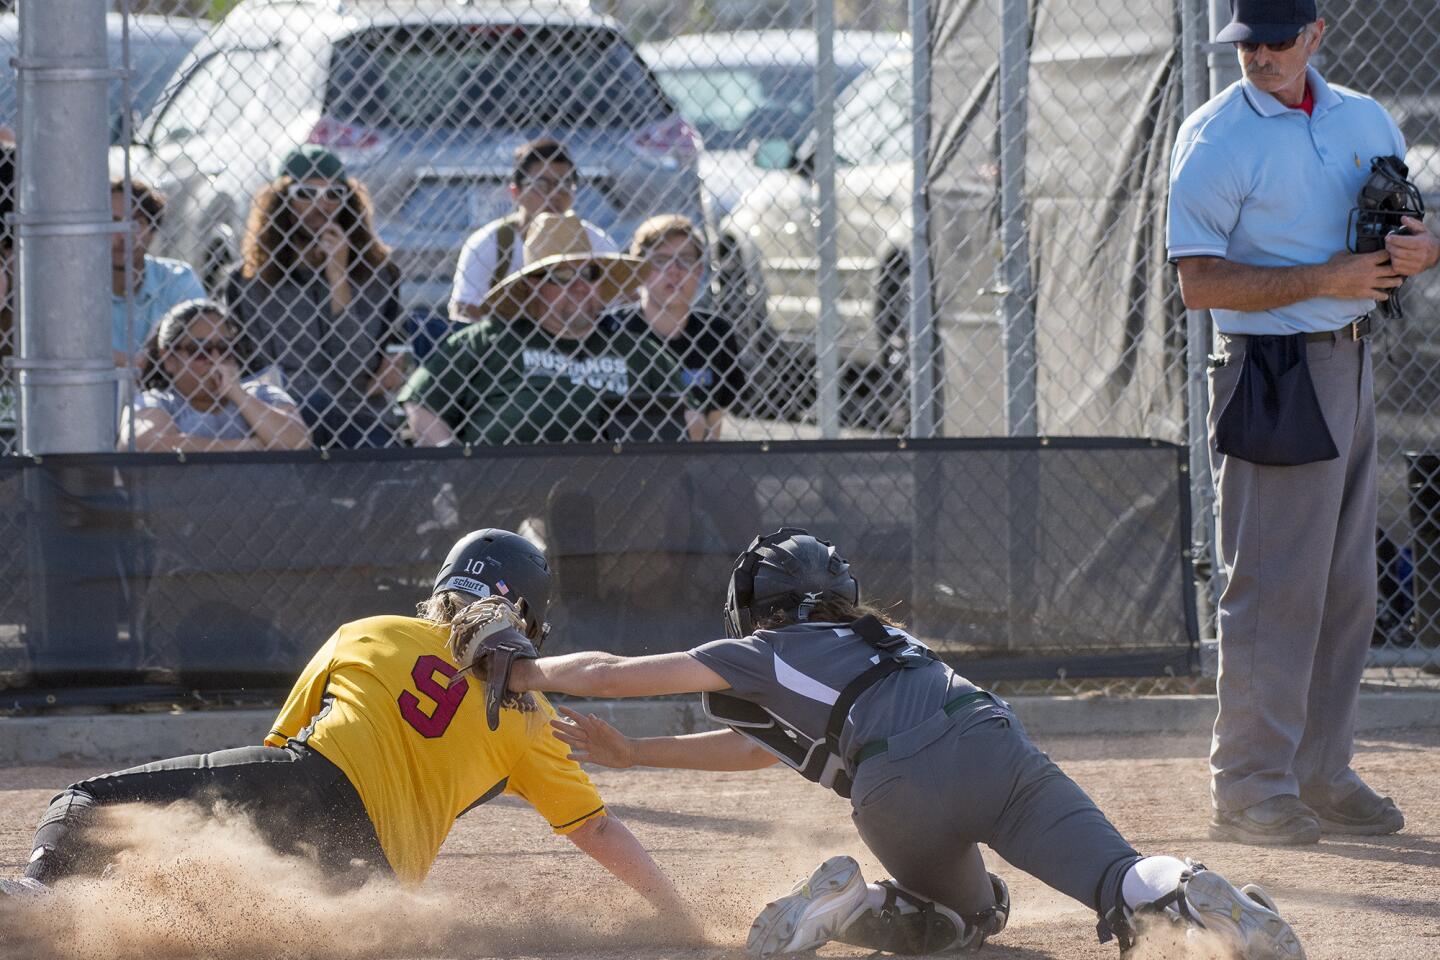 Etancia vs. Costa Mesa in a girls' softball game